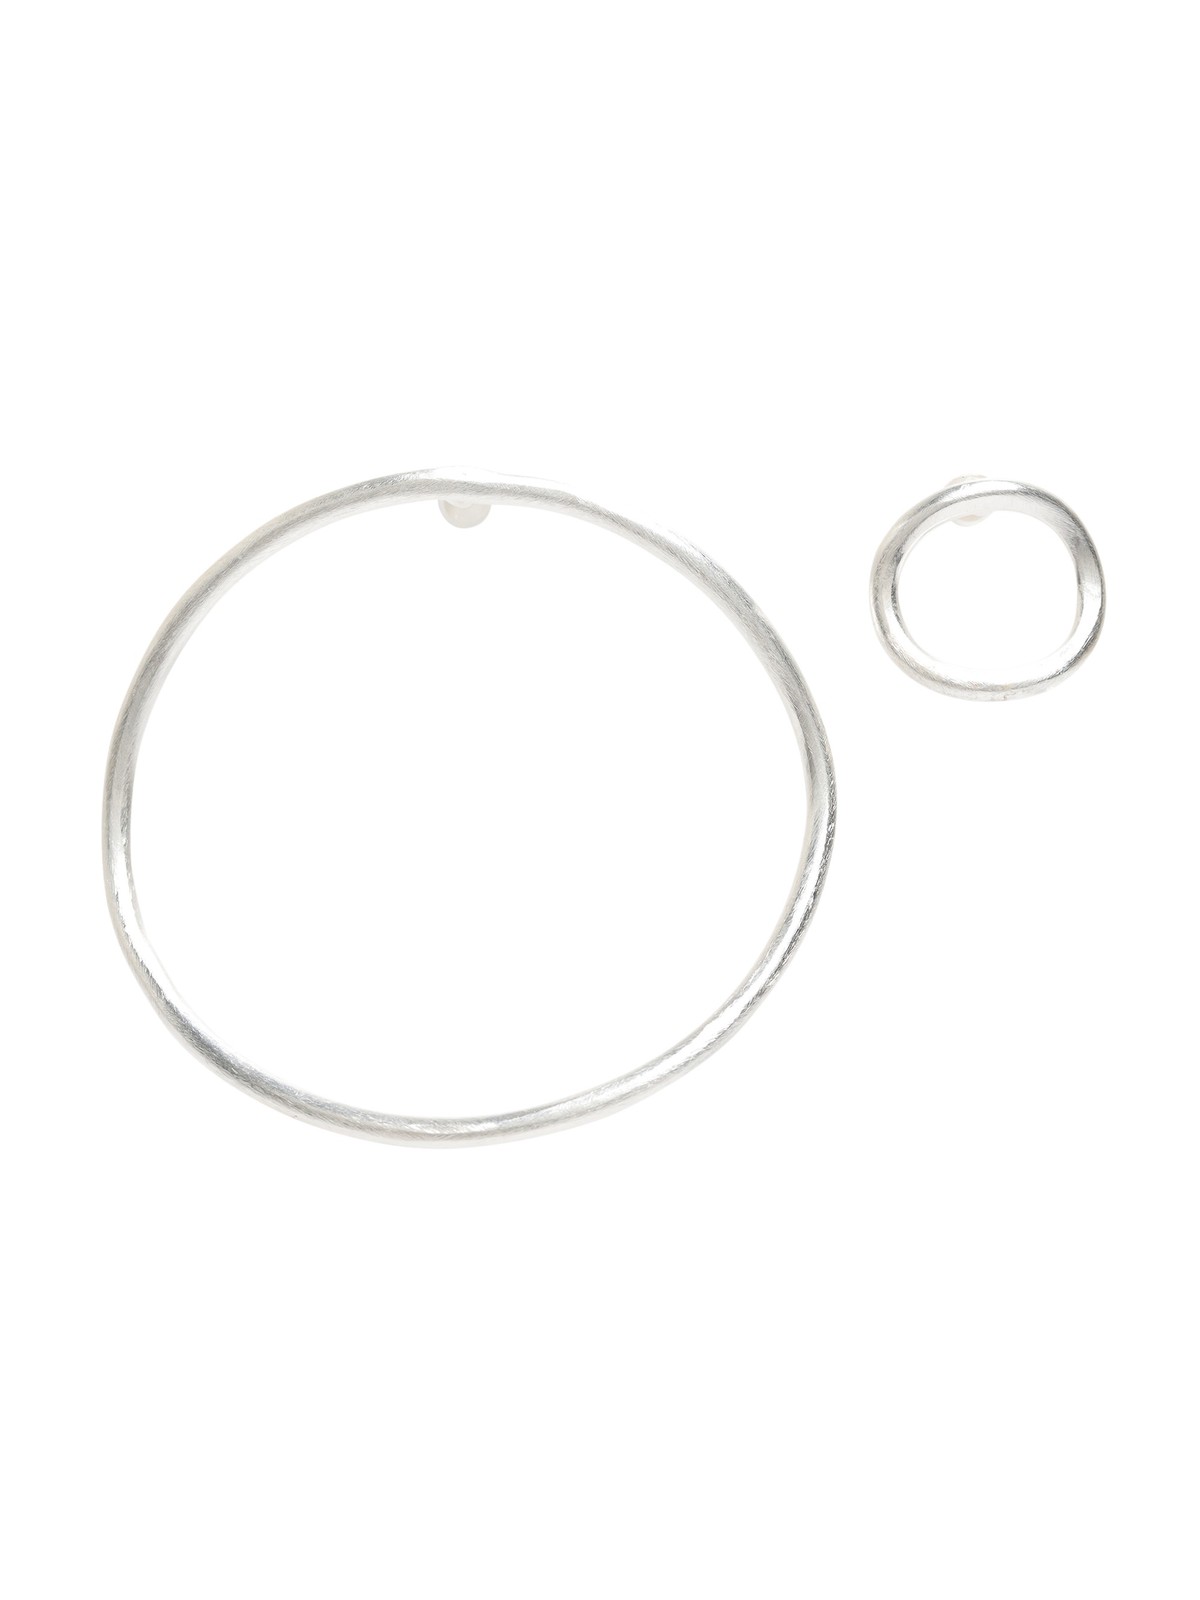 brinco de argolas assimétricas banhados a prata | silver-plated asymmetrical hoop earrings